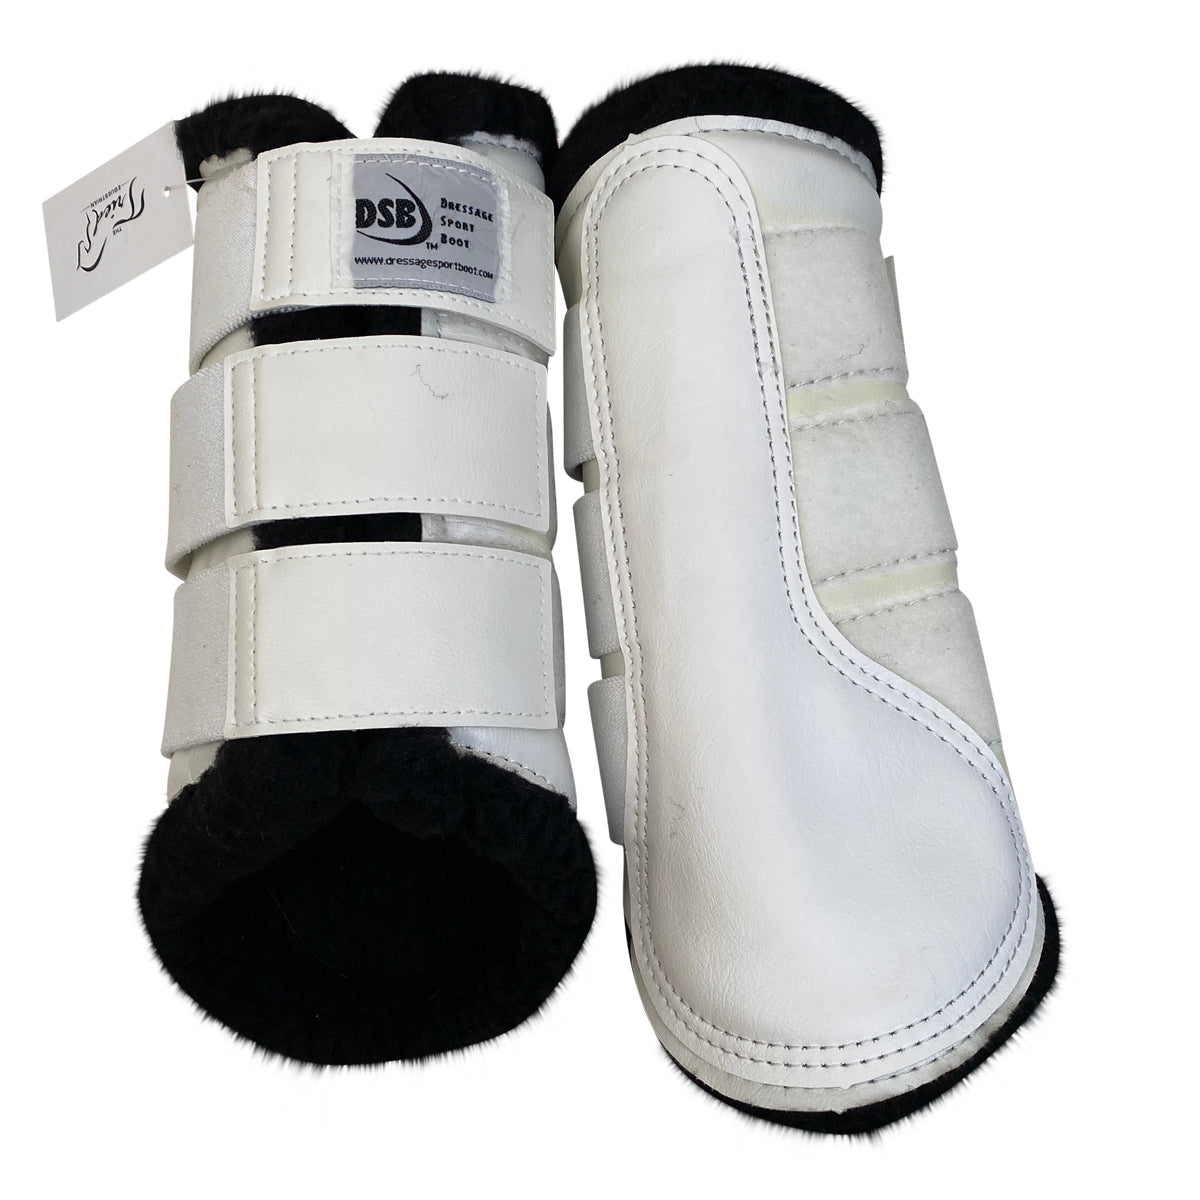 DSB Original Dressage Sport Boot in White/Black